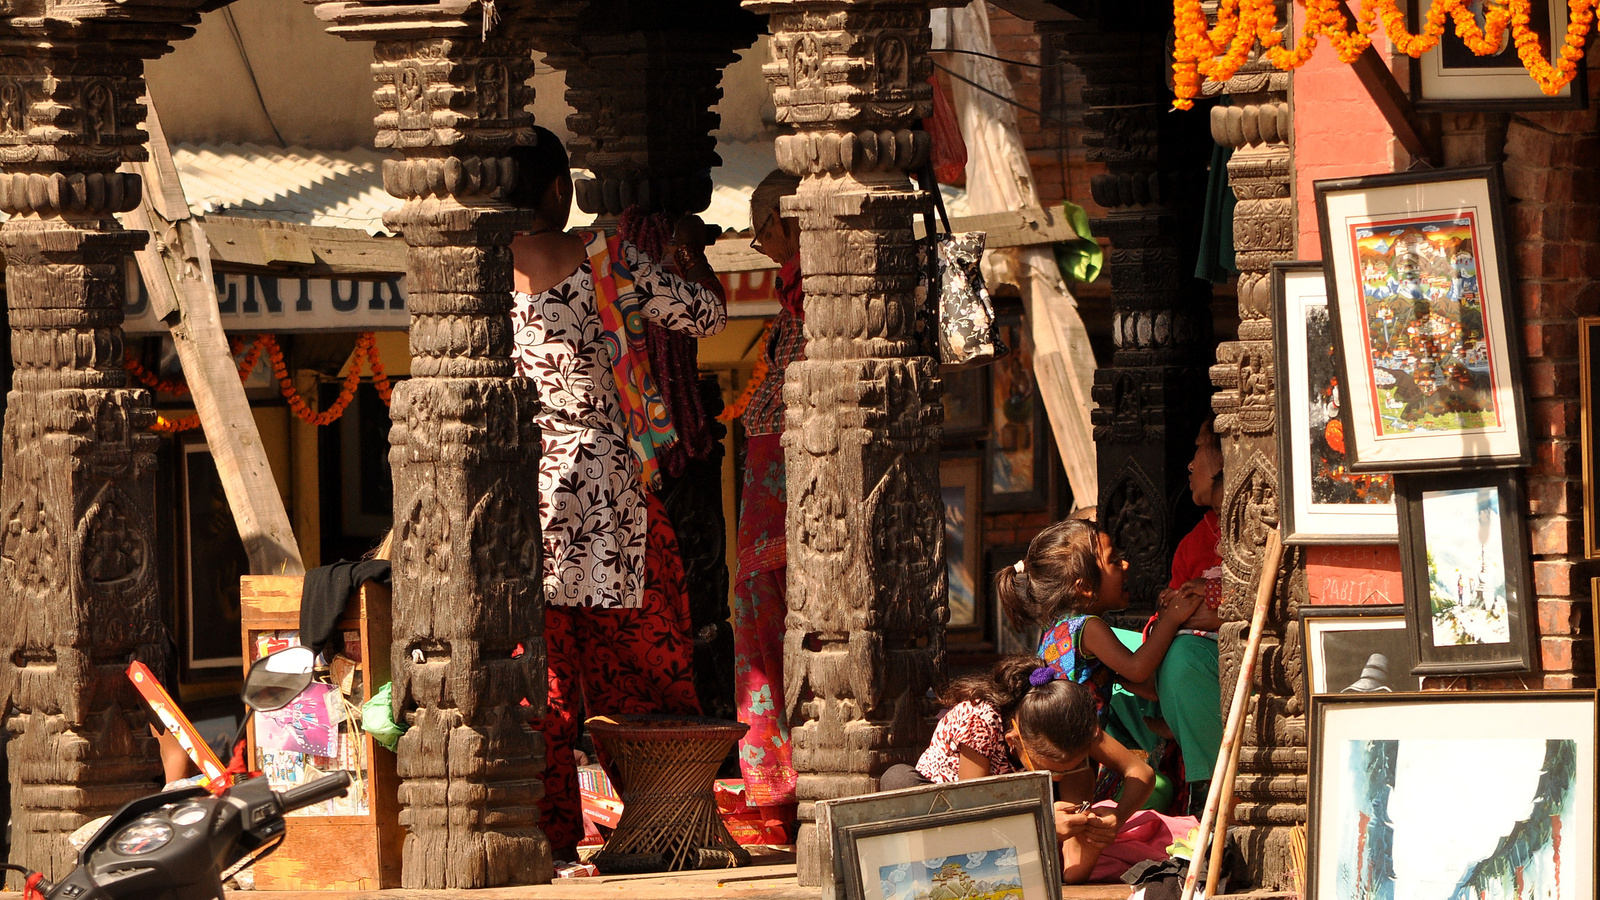 Patan Durbar square